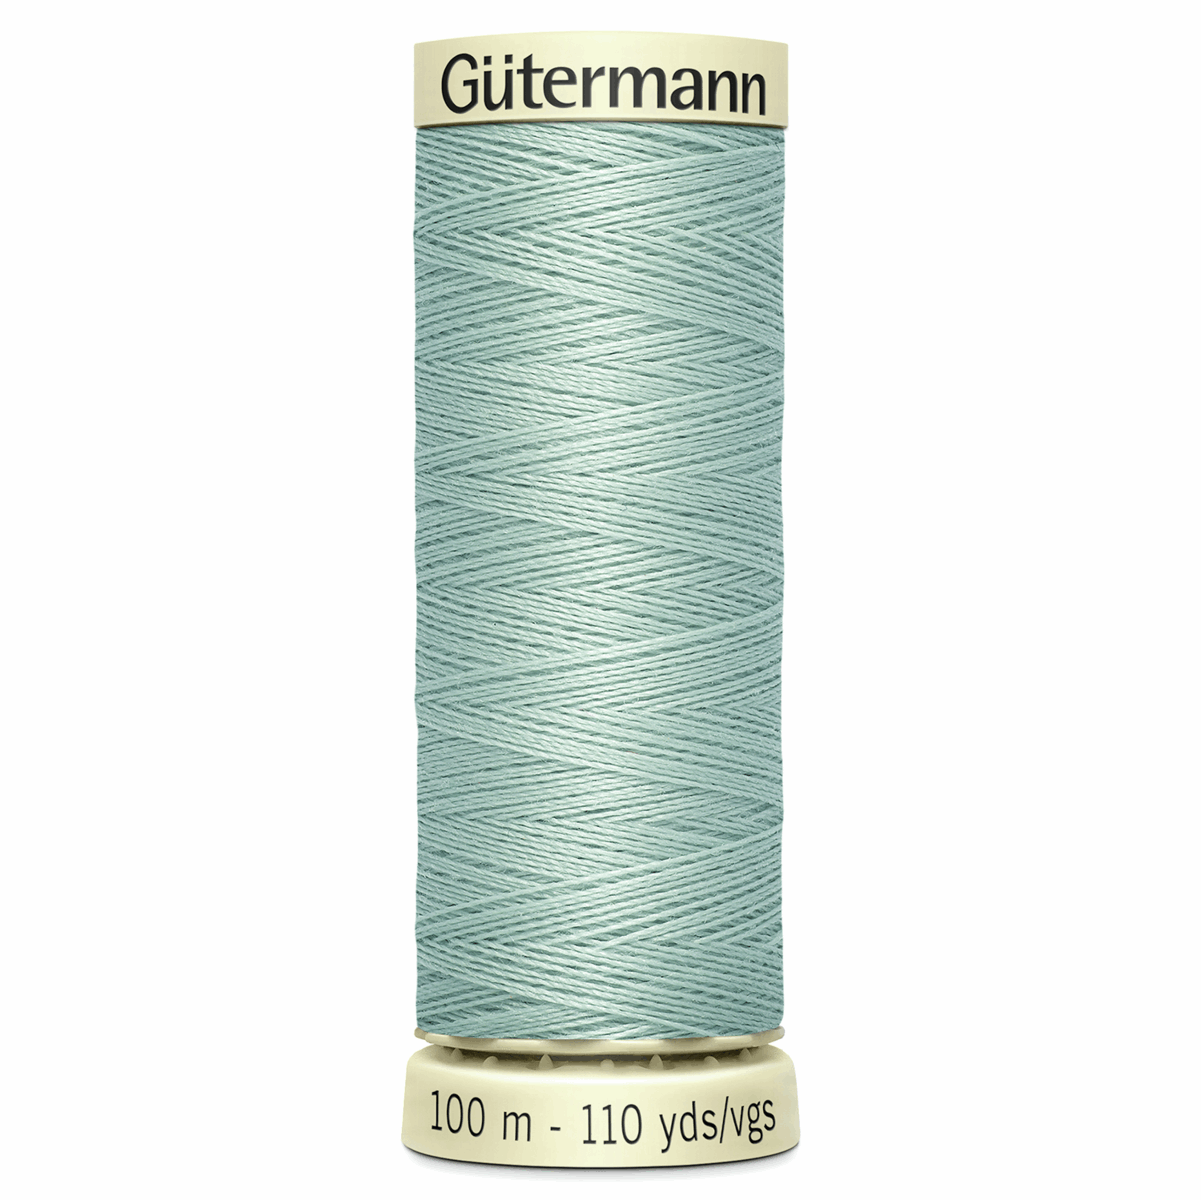 Gutermann Sew-All Thread 100m - Misty Jade (#297)